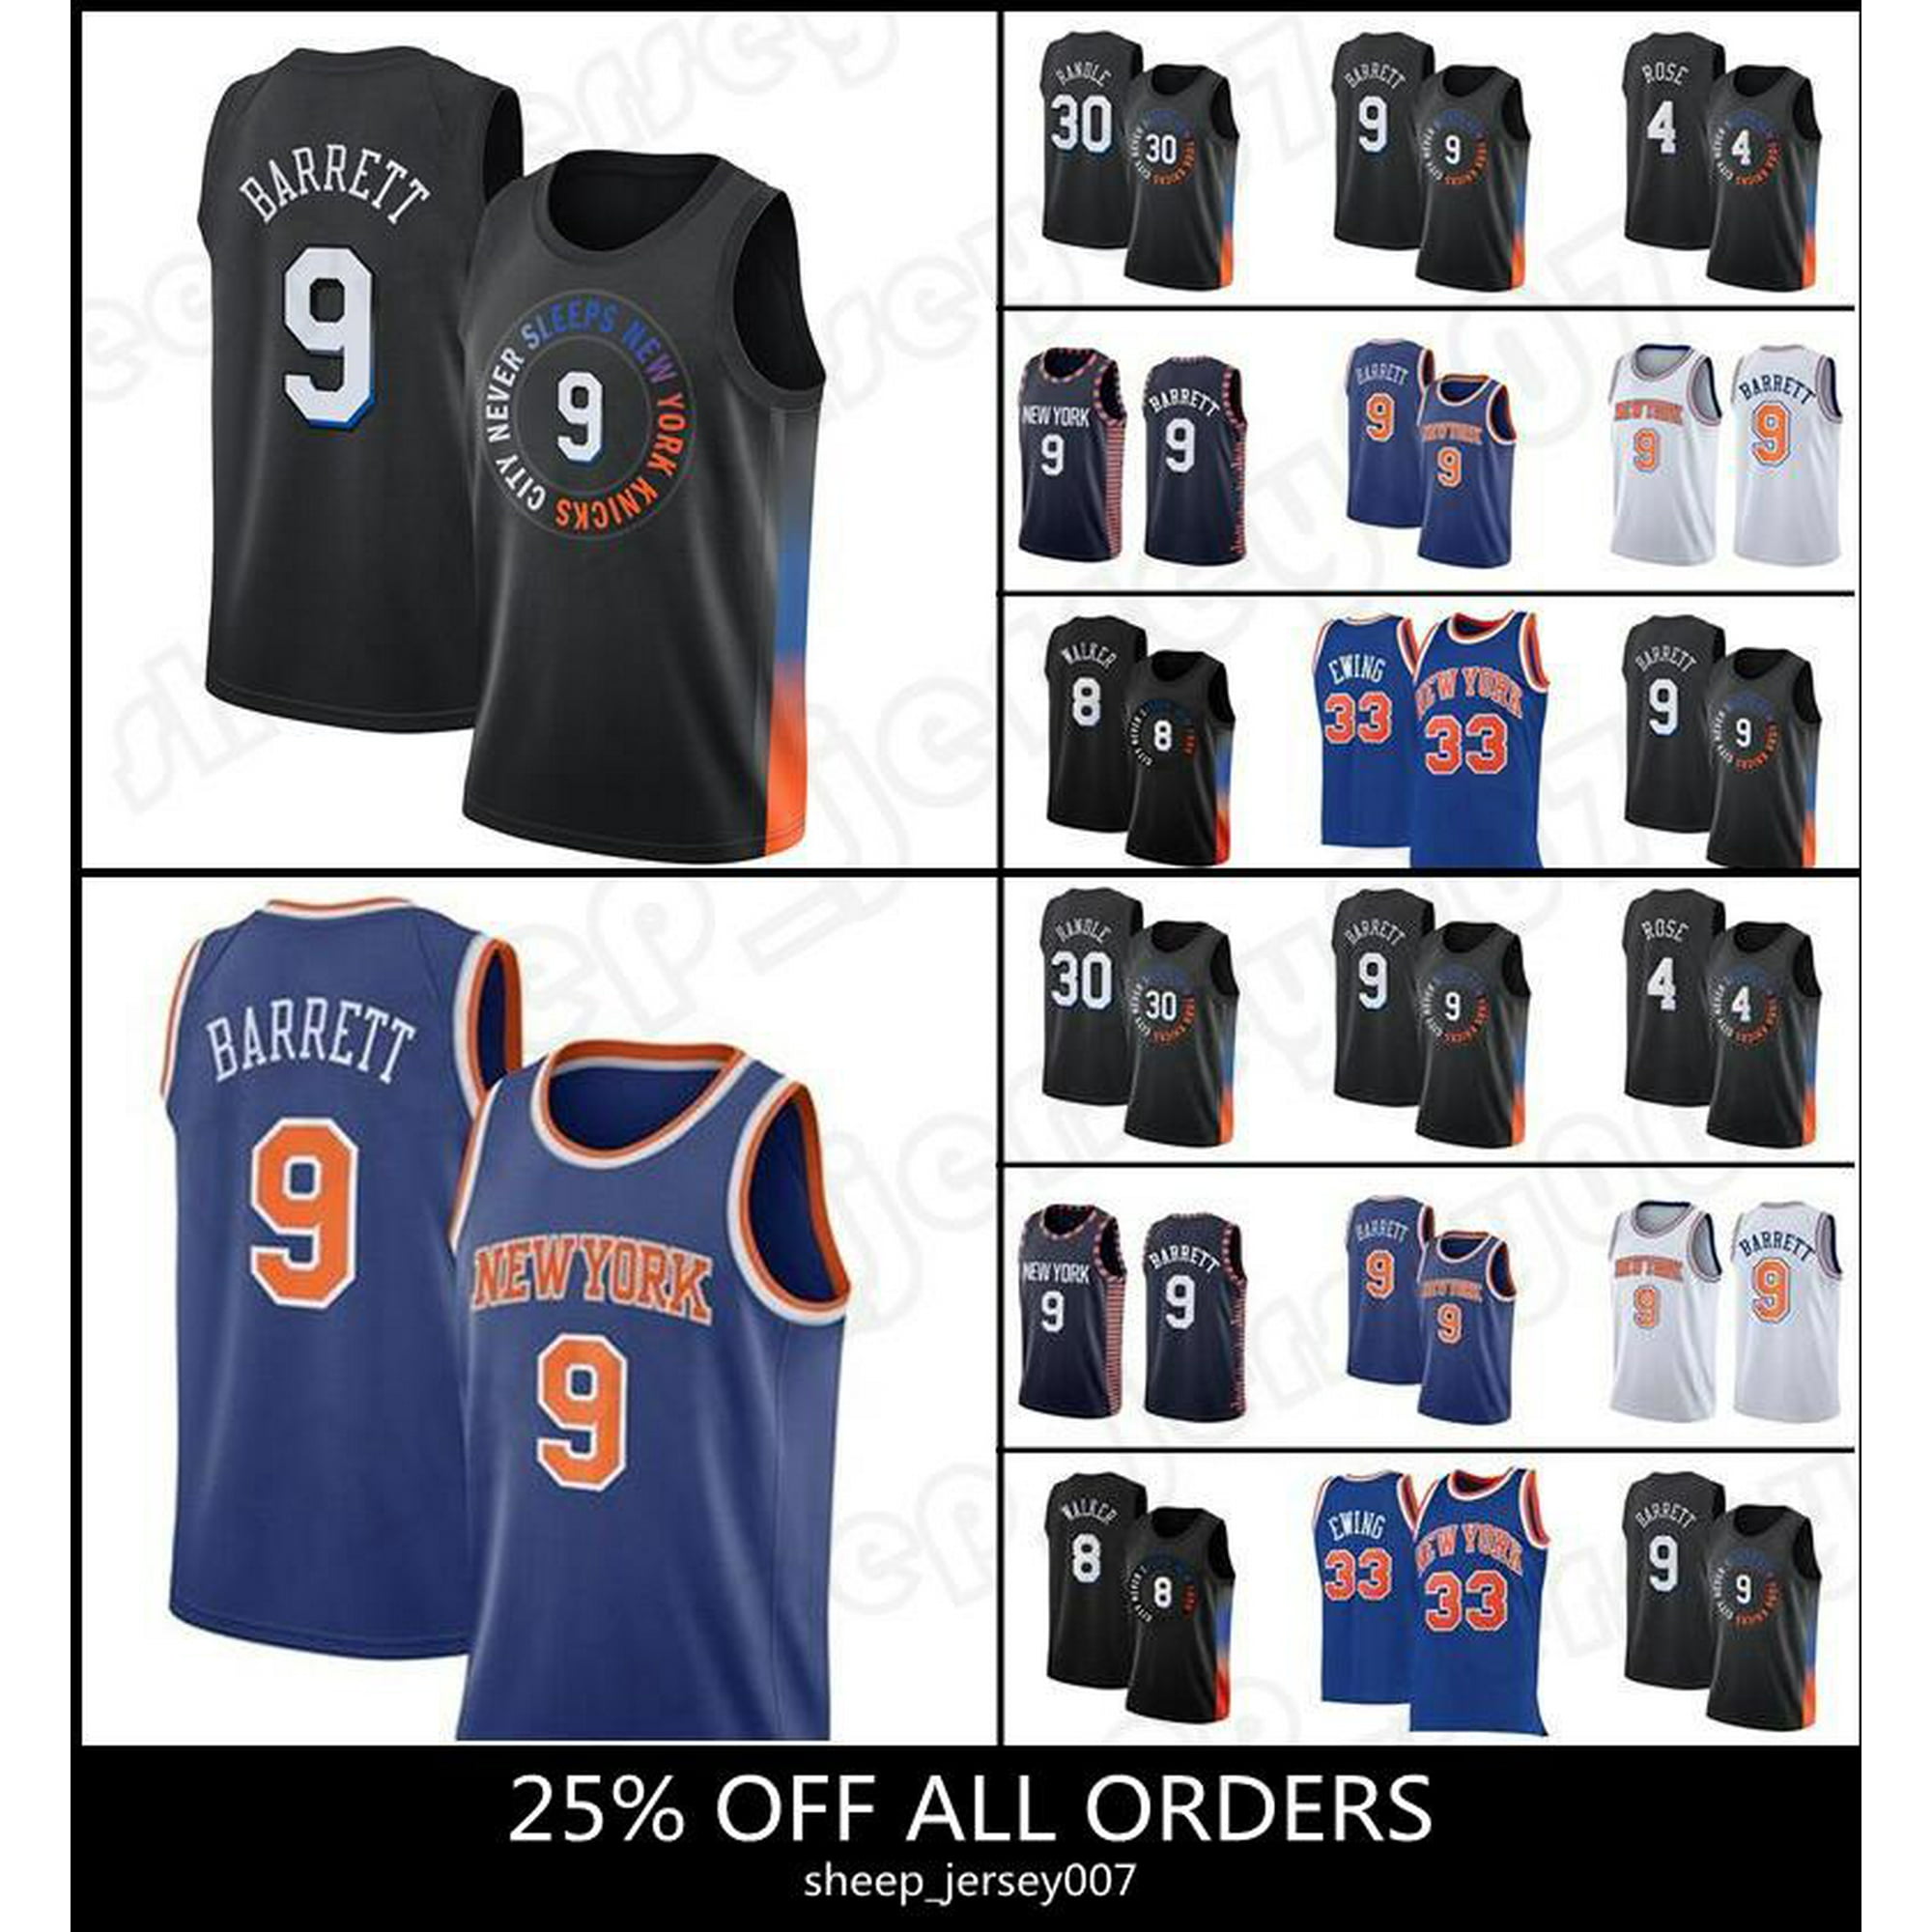 New York Knicks Derrick Rose NBA Jerseys for sale